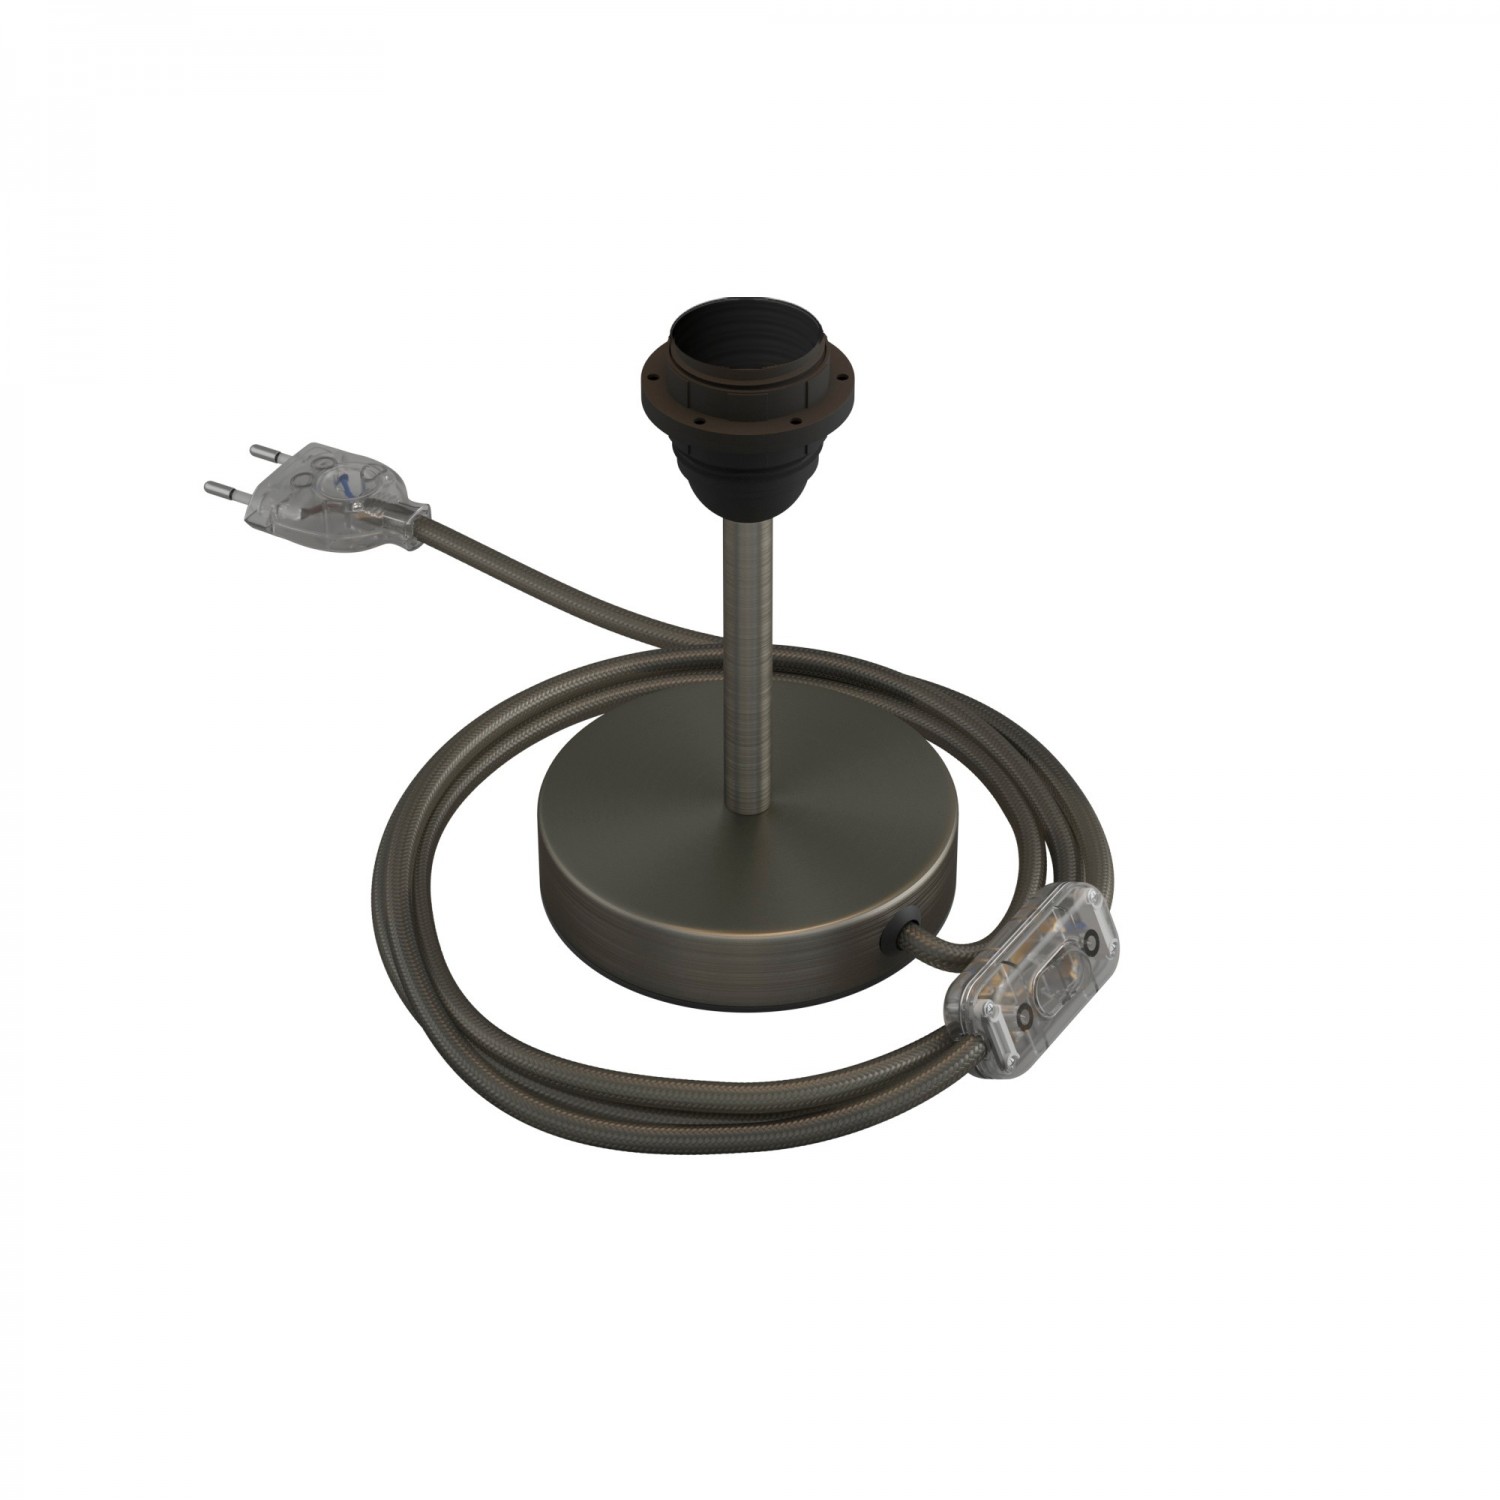 Alzaluce til lampeskærm - Bordlampe i metal